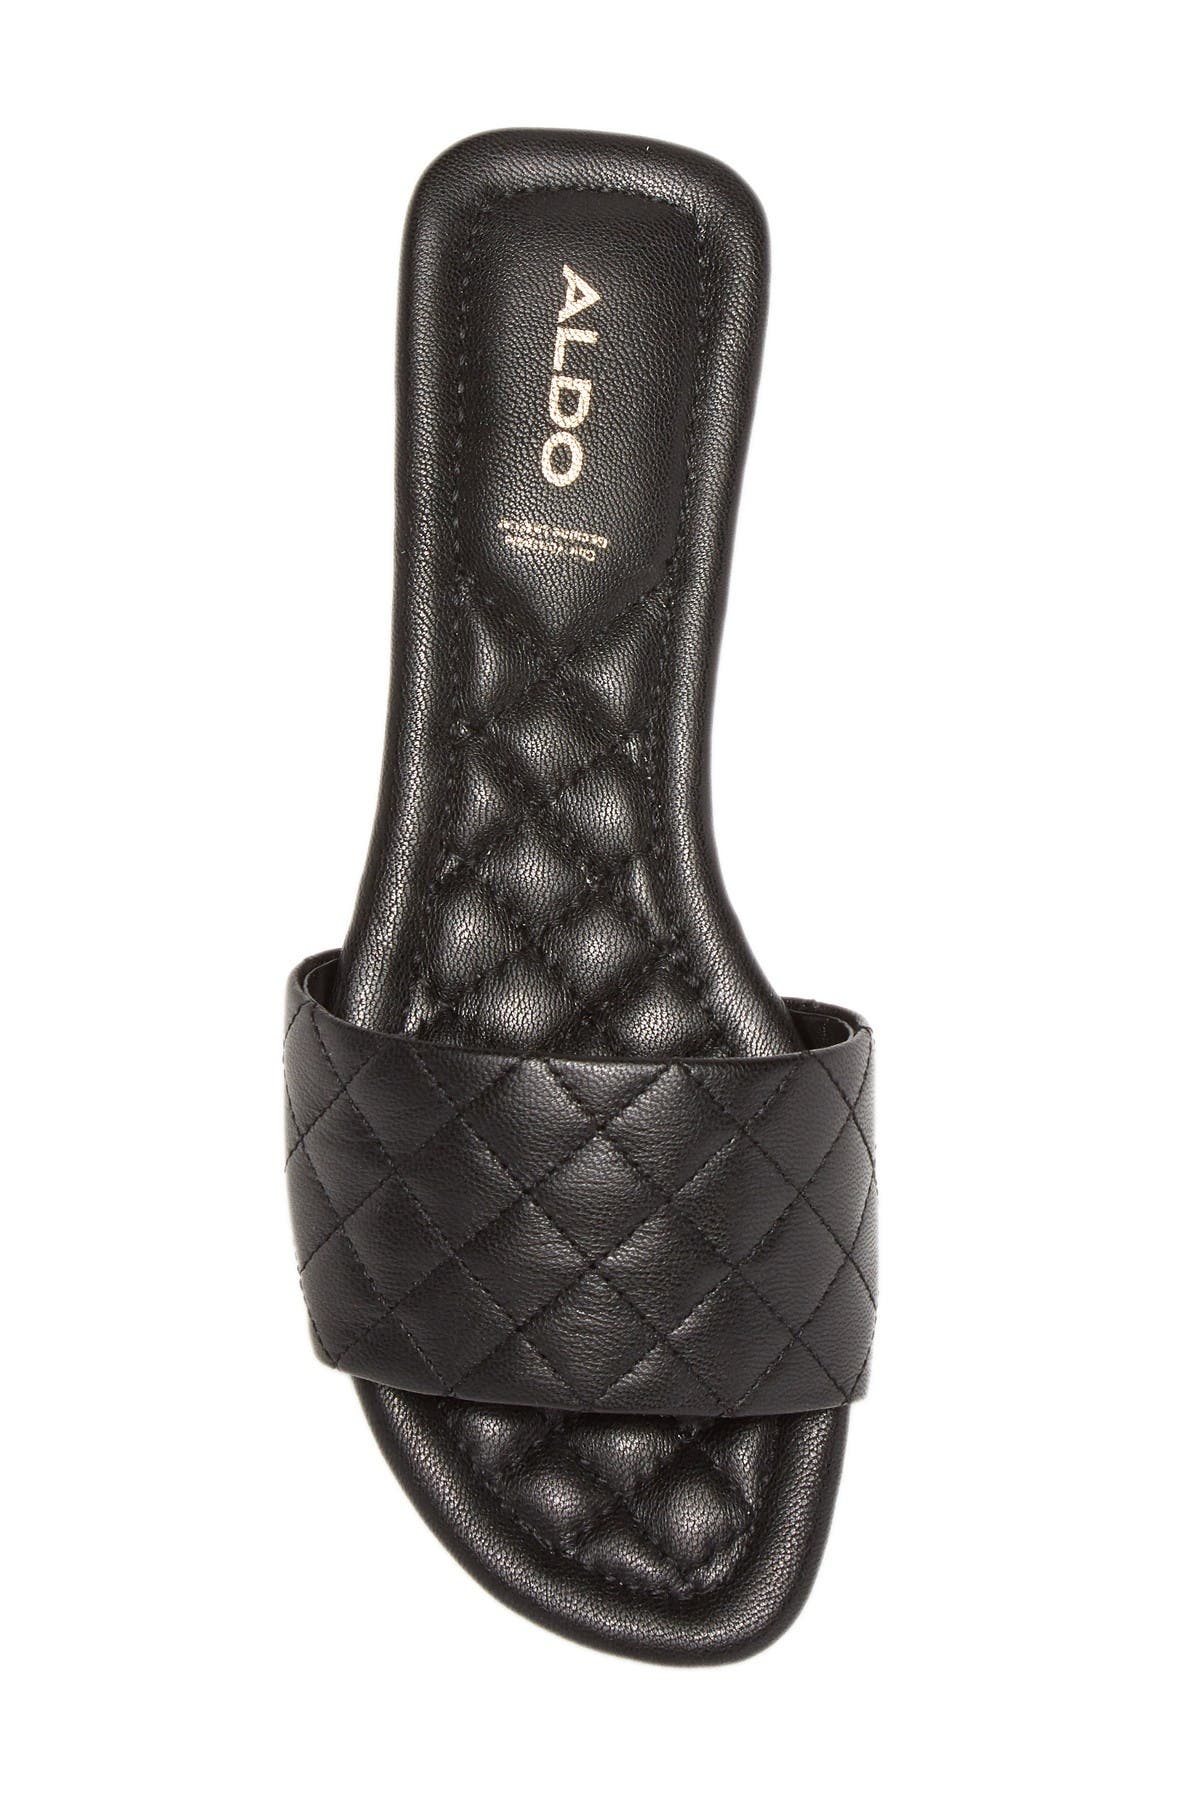 Aldo | Ceryan Leather Slide Sandal 